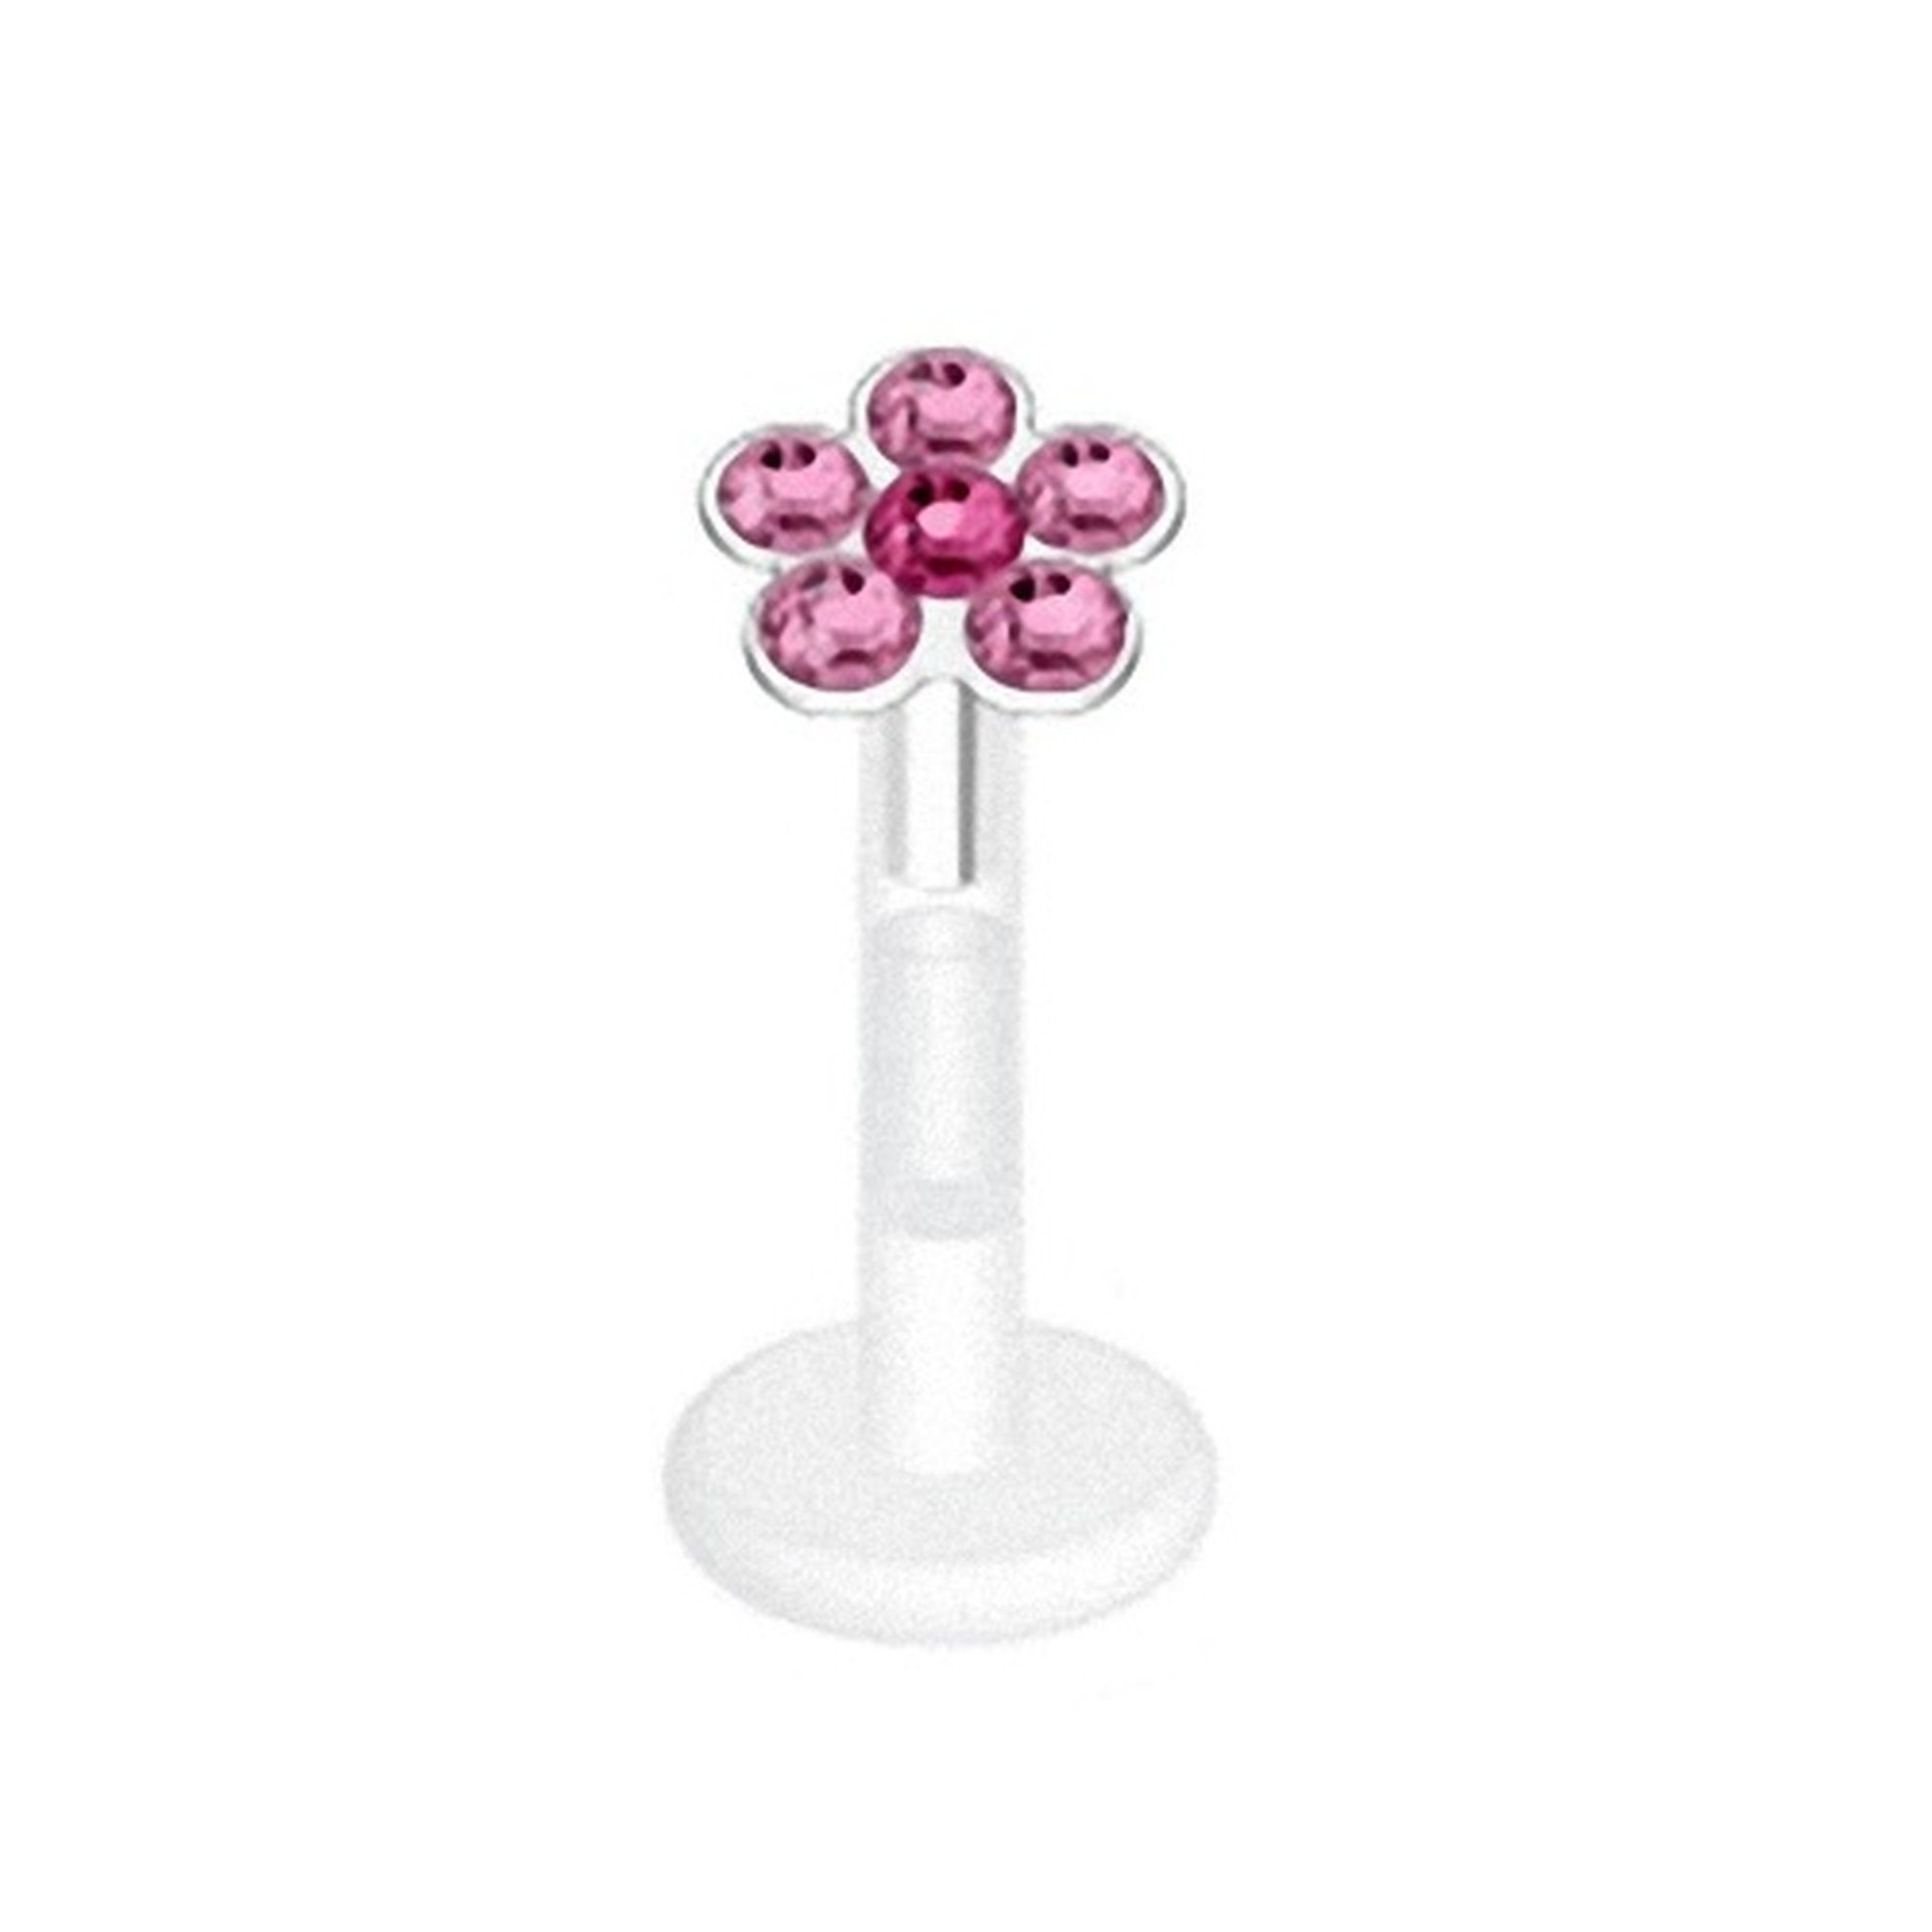 Taffstyle Piercing-Set Piercing Bioflex Monroe Multi Kristall Blume 8mm, Lippenpiercing Lippe Schmuck Bioflex Monroe Multi Kristall Blume 8mm Pink - Fuchsia